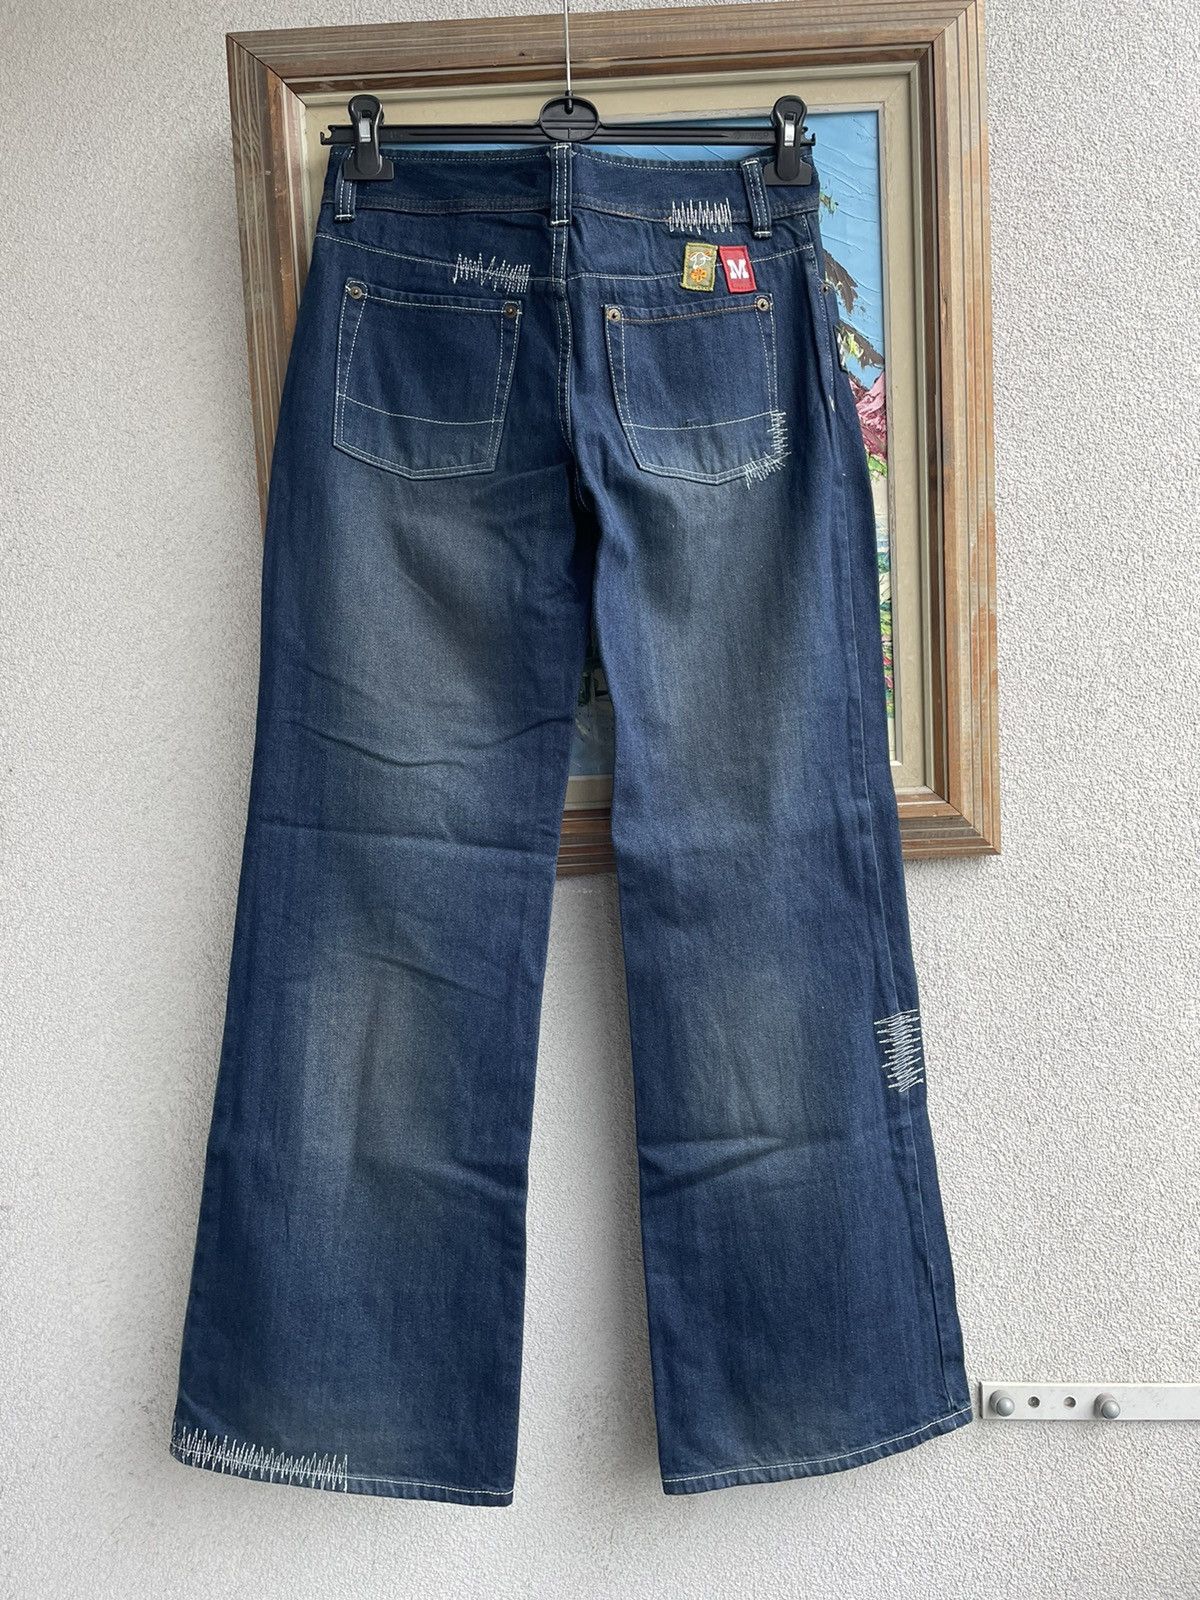 Vintage Vintage 90s MAMBO Australia Denim Jeans Rare Streetwear Hype Size US 30 / EU 46 - 2 Preview